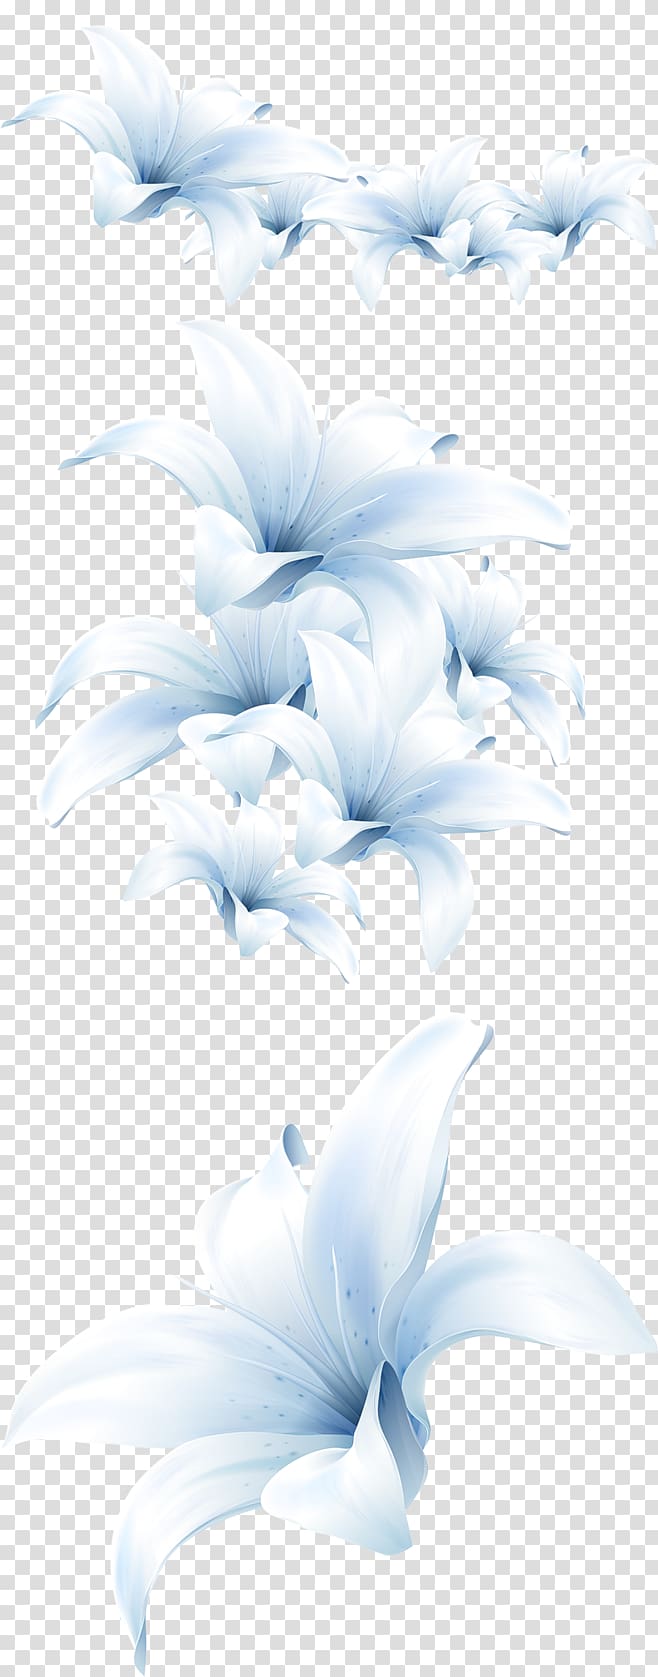 Flower Madonna Lily Petal Portable Network Graphics, flower transparent background PNG clipart